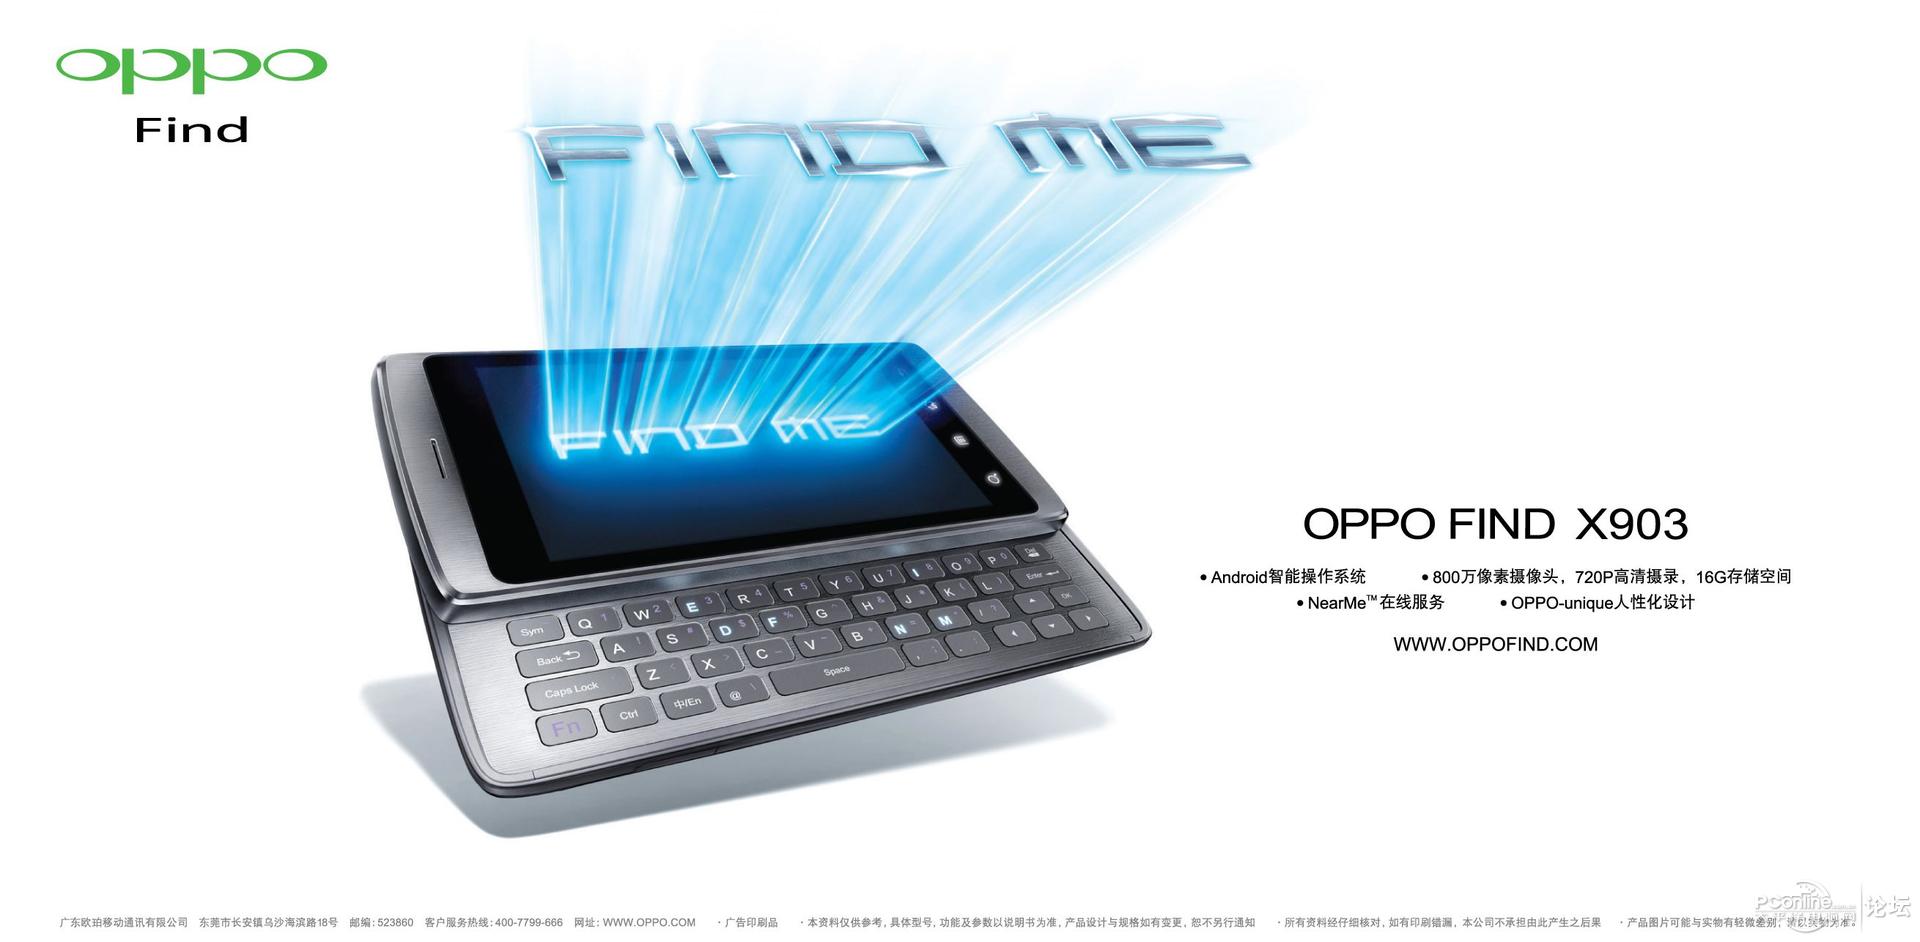 OPPO Find智能手机X903产品说明书